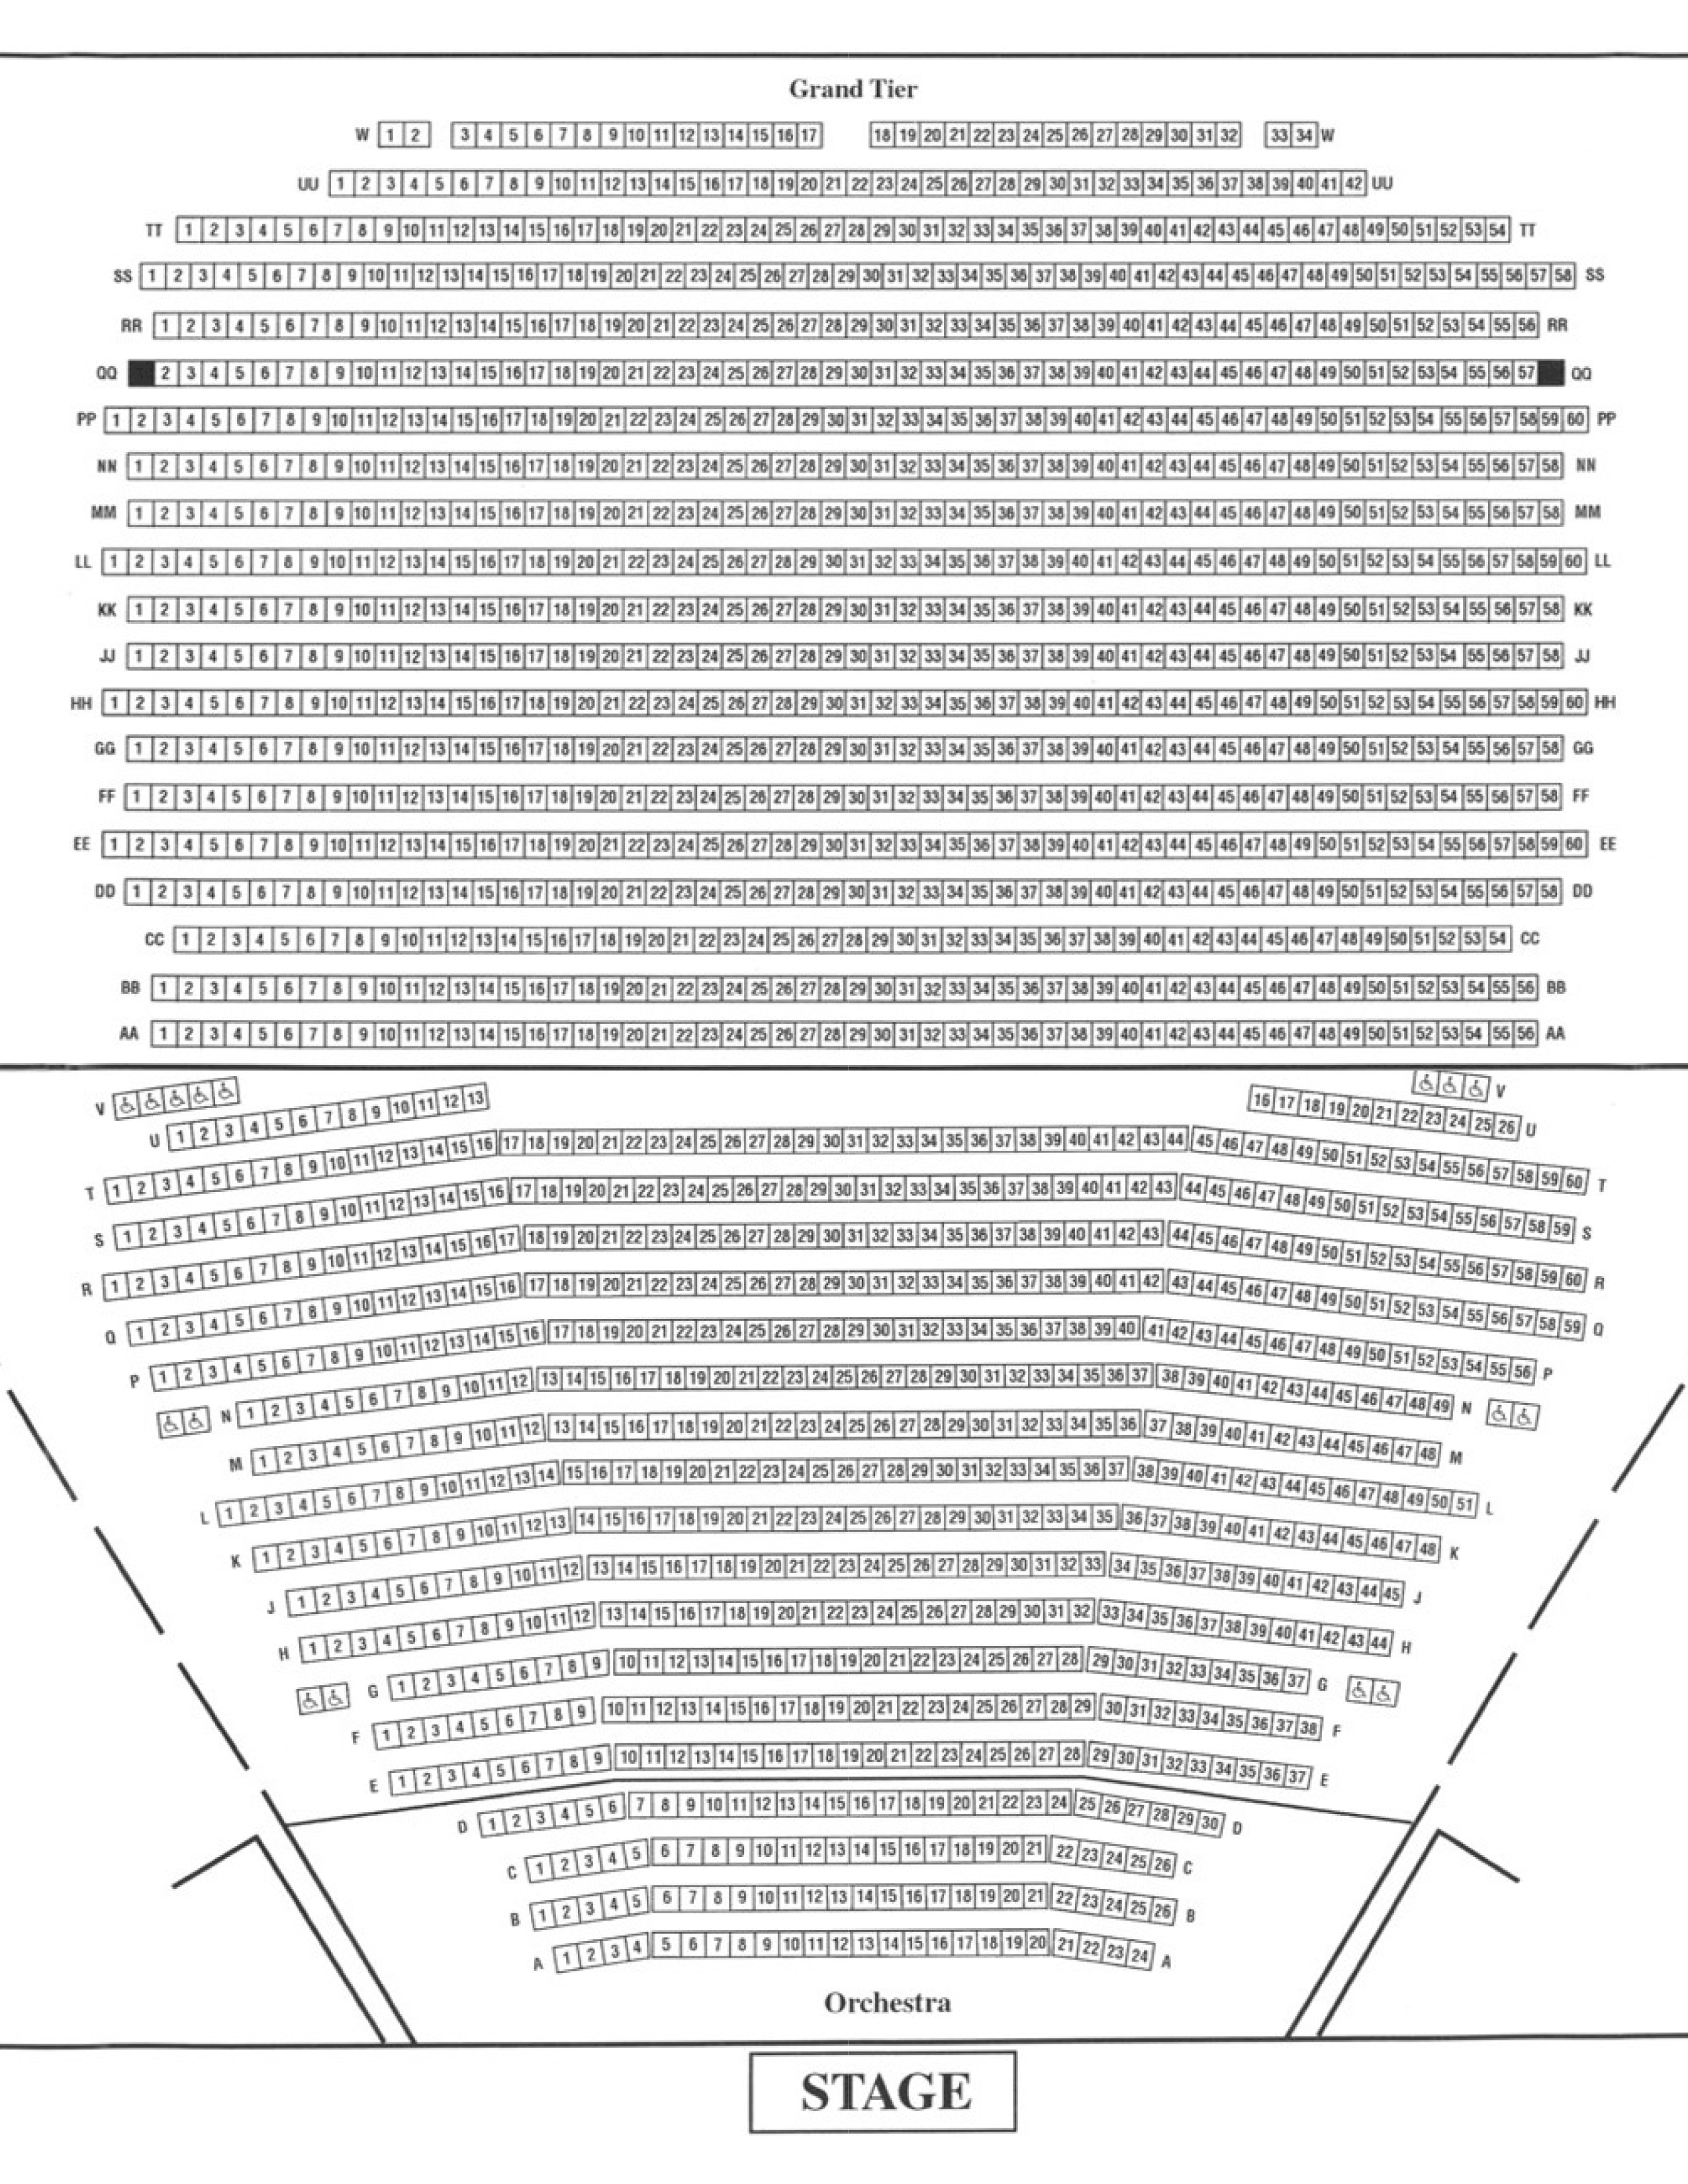 Harrison Opera House - Seating Chart